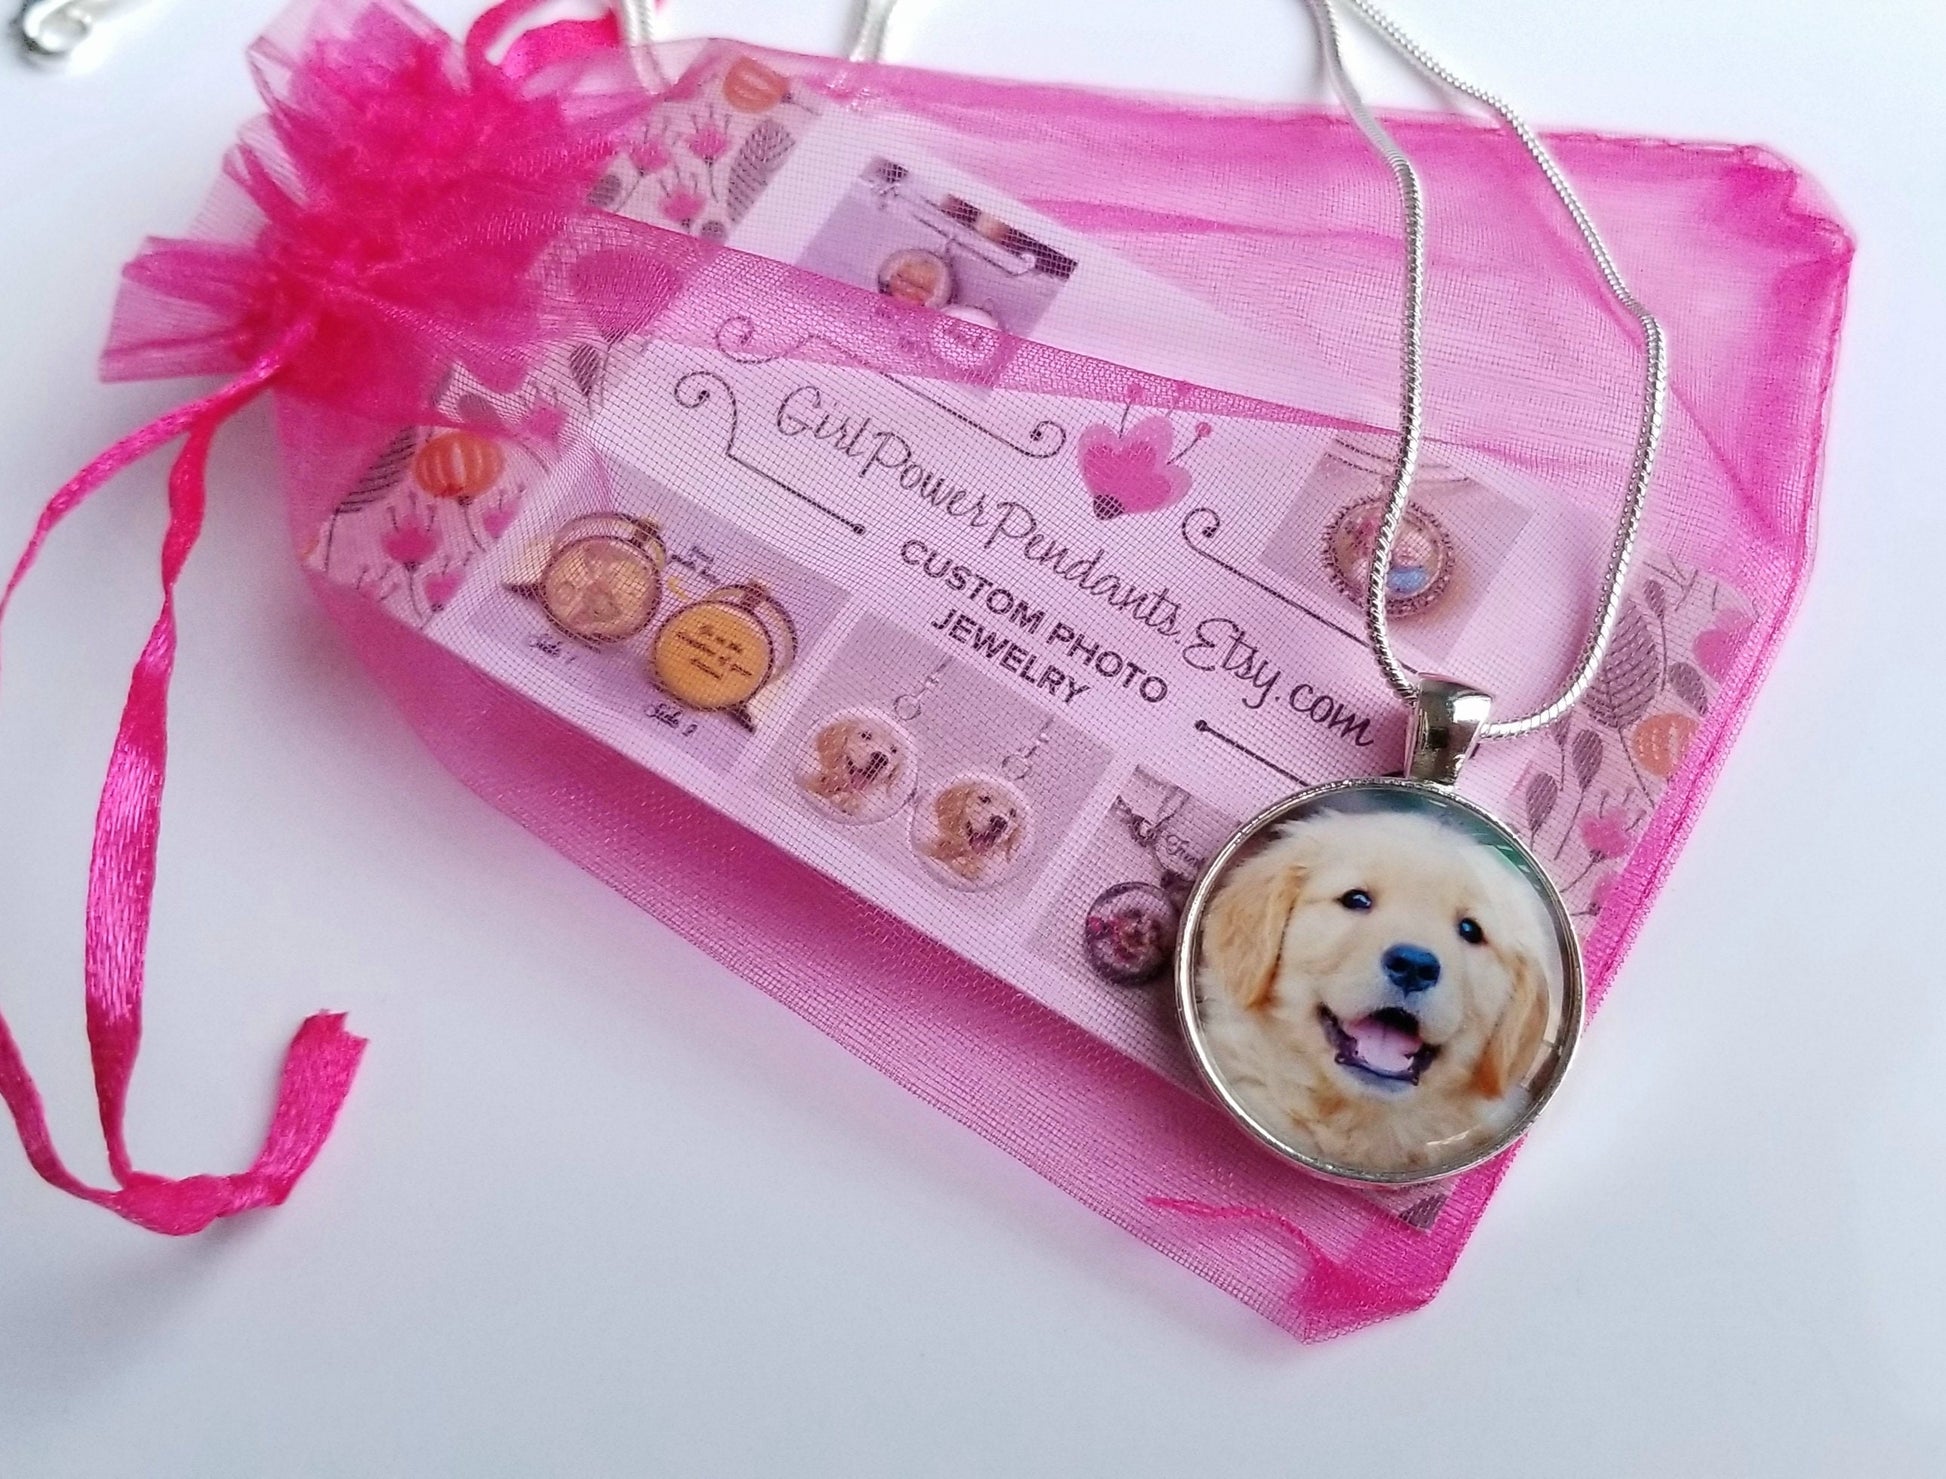 Pet Loss Gift, Dog Memorial Jewelry